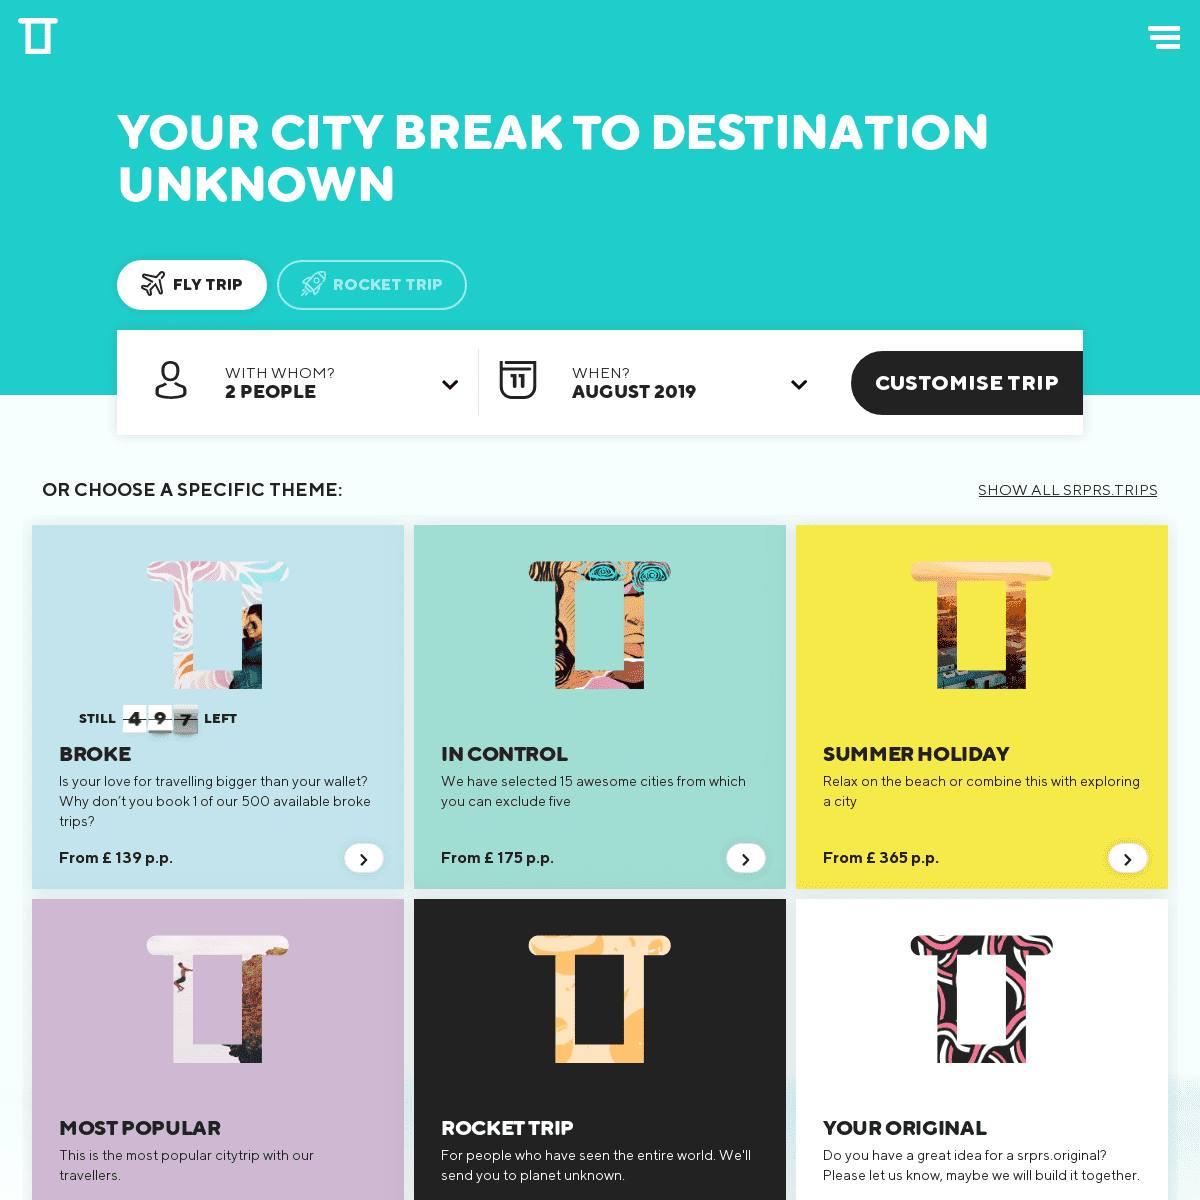 srprs.me - Go on a city break to destination unknown